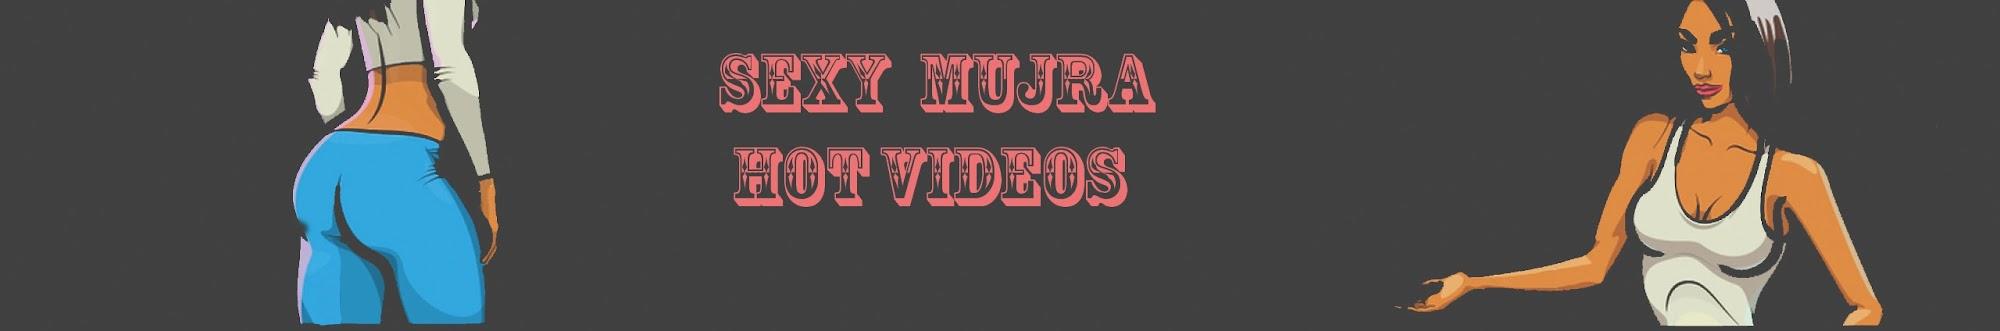  Sexy Mujra Hot videos